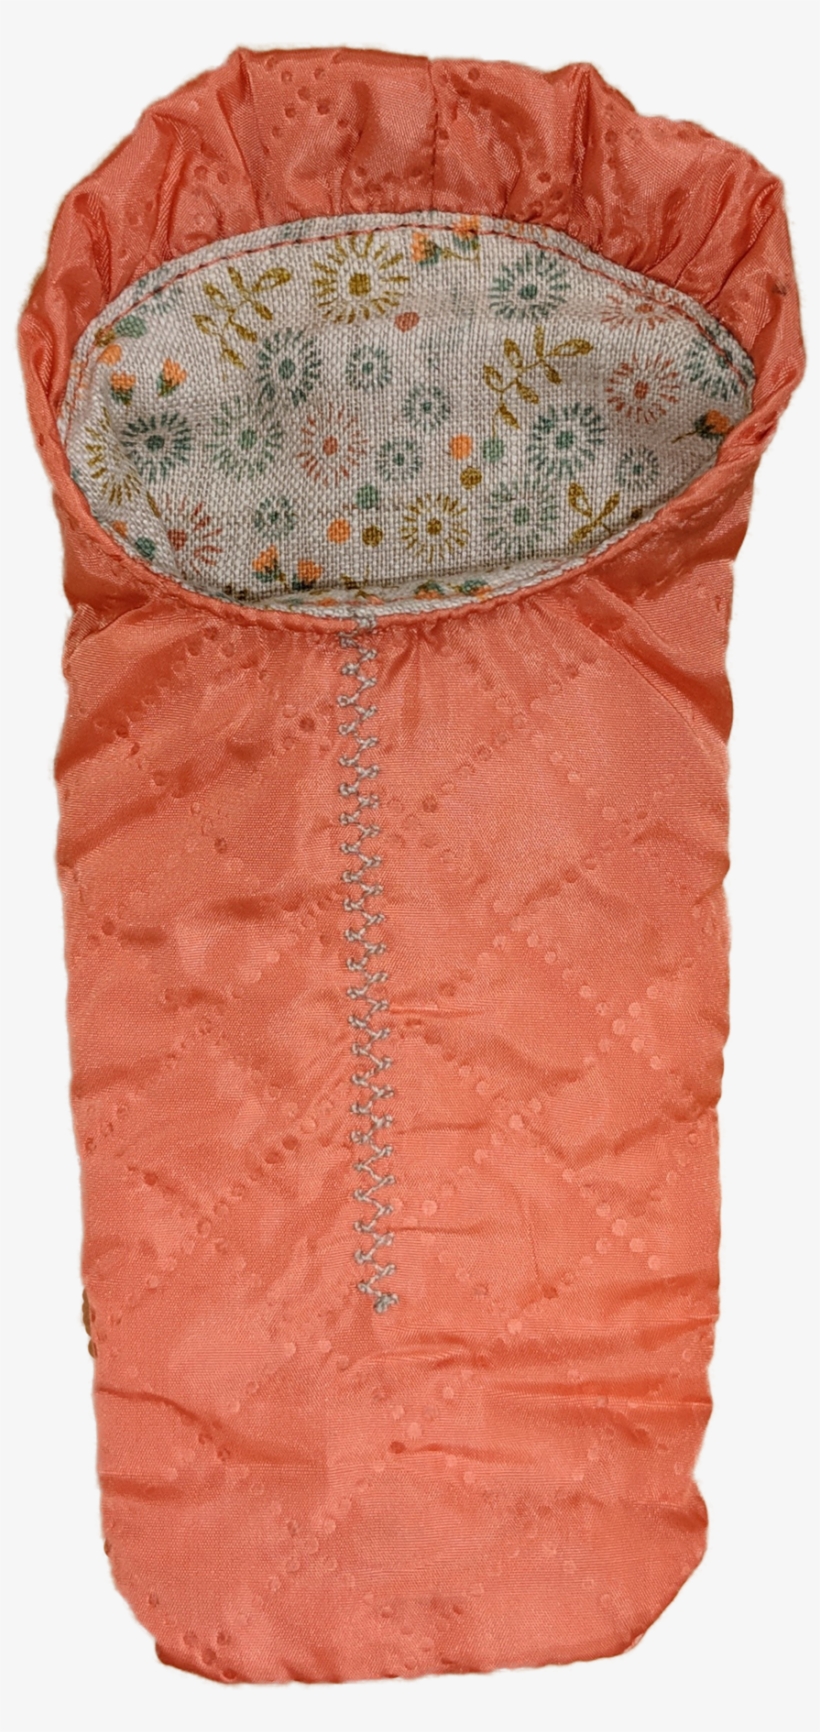 Mouse Sleeping Bag - Garment Bag, transparent png #8486261